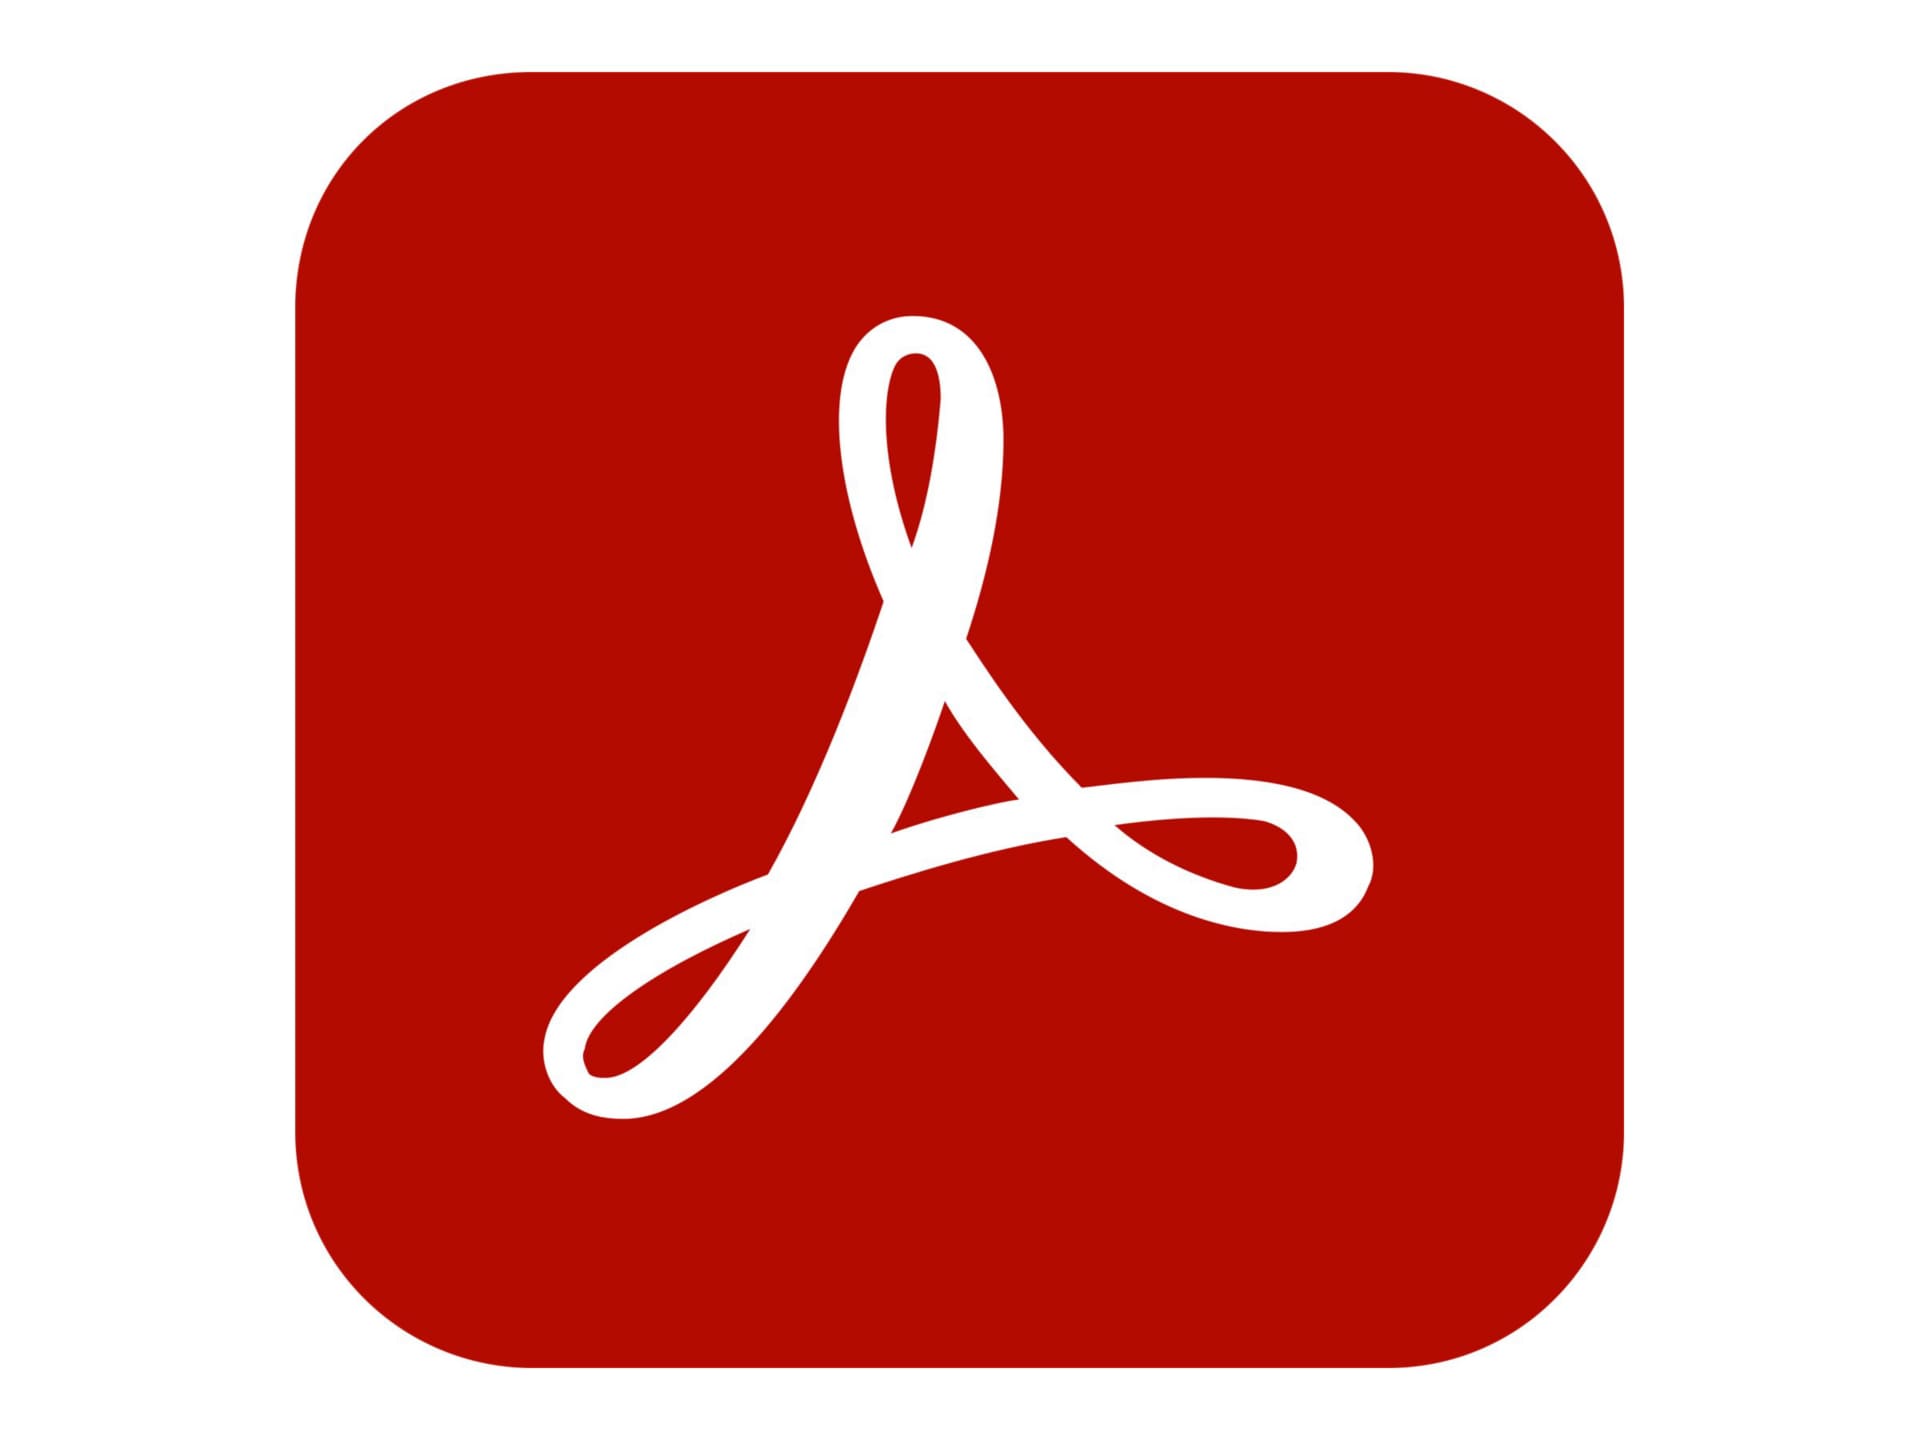 Adobe Acrobat Pro for enterprise - Feature Restricted Licensing Subscriptio